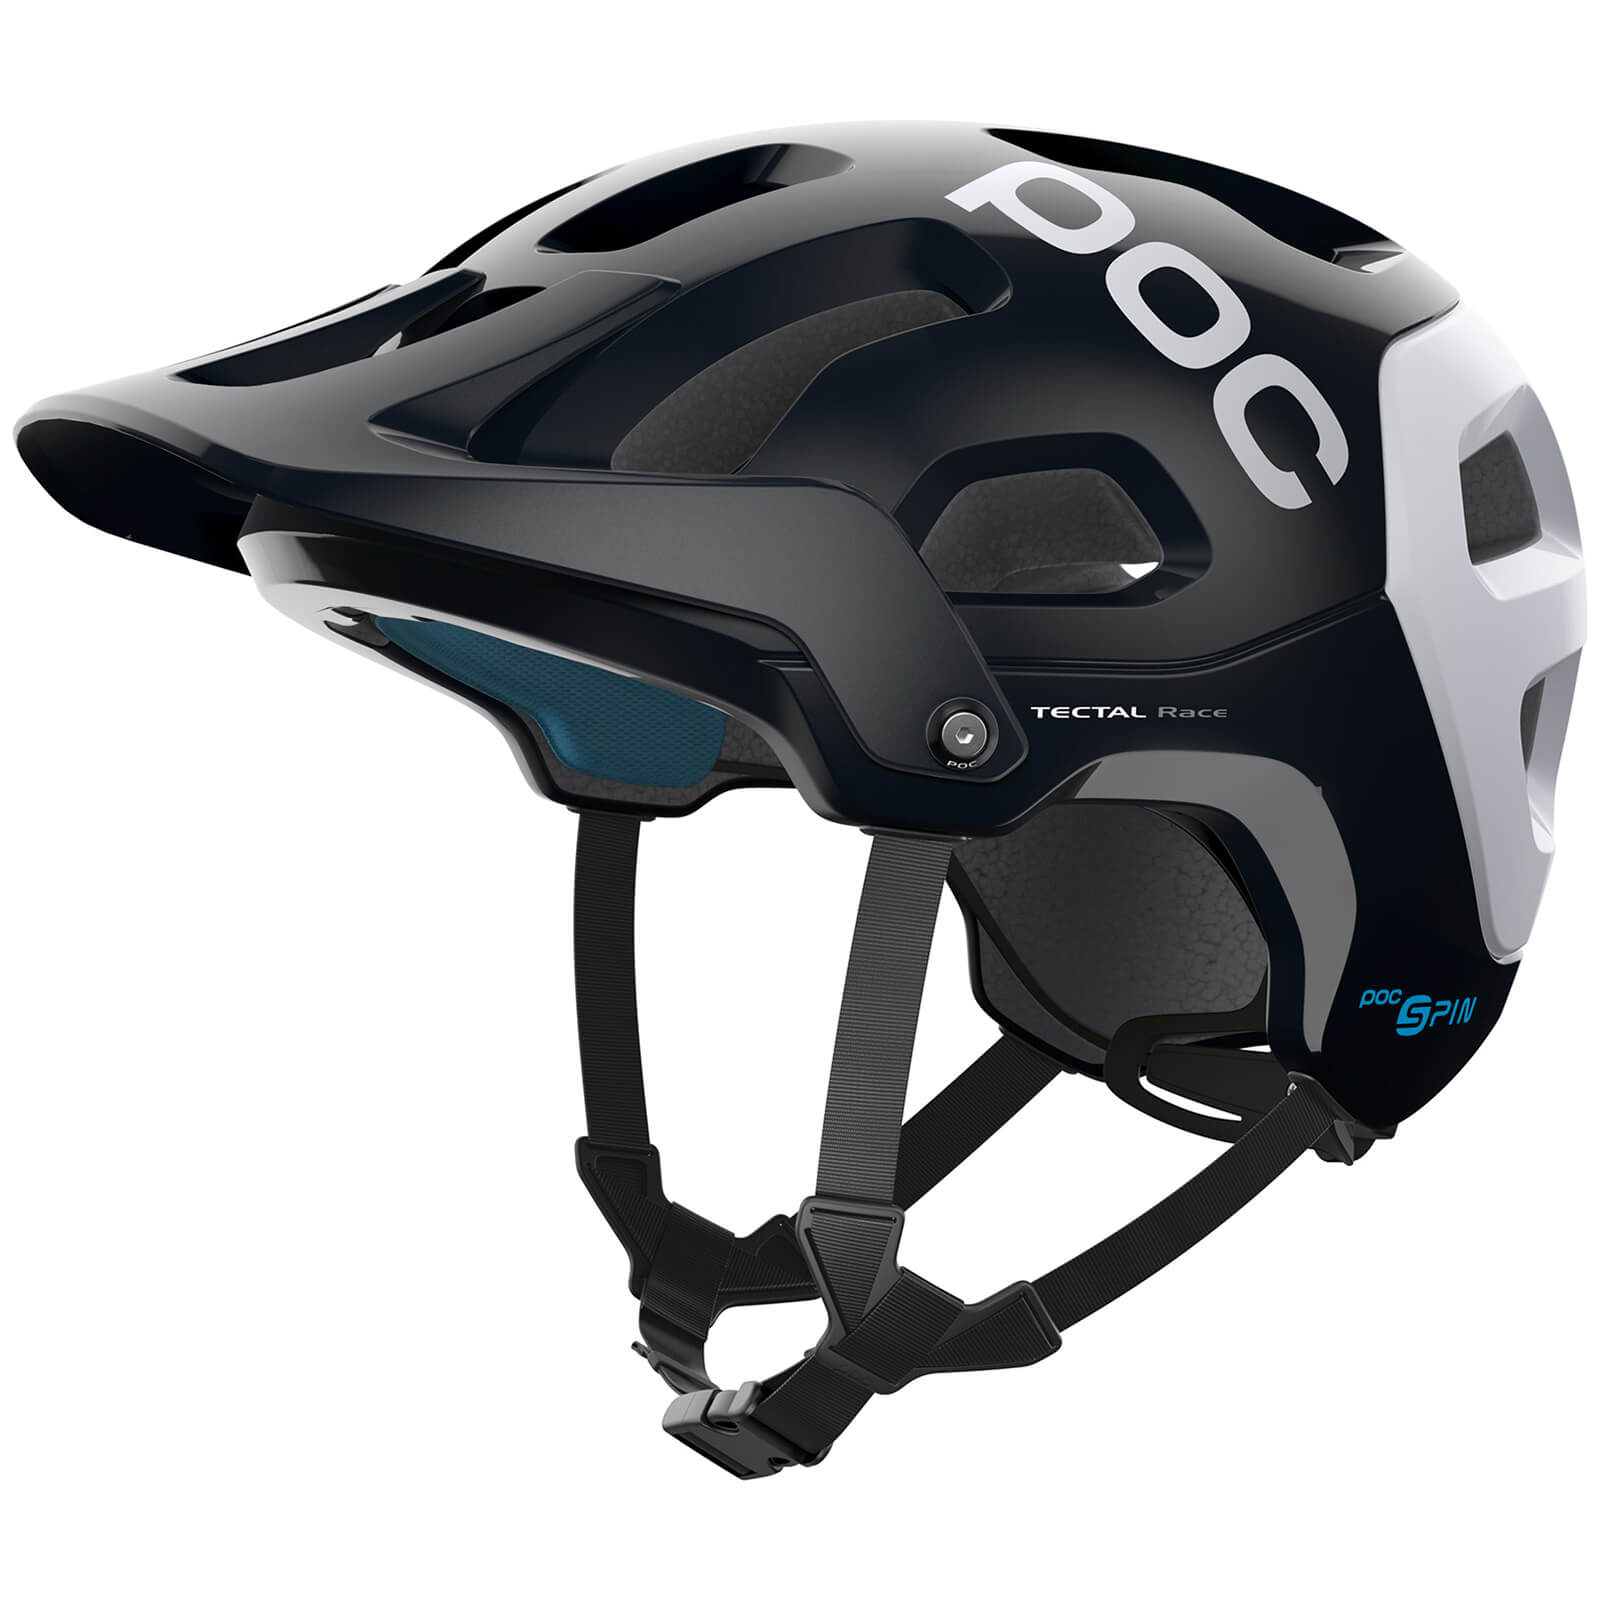 POC Tectal Race SPIN MTB Helmet - XS-S/51-54cm - Uranium Black/Hydrogen White